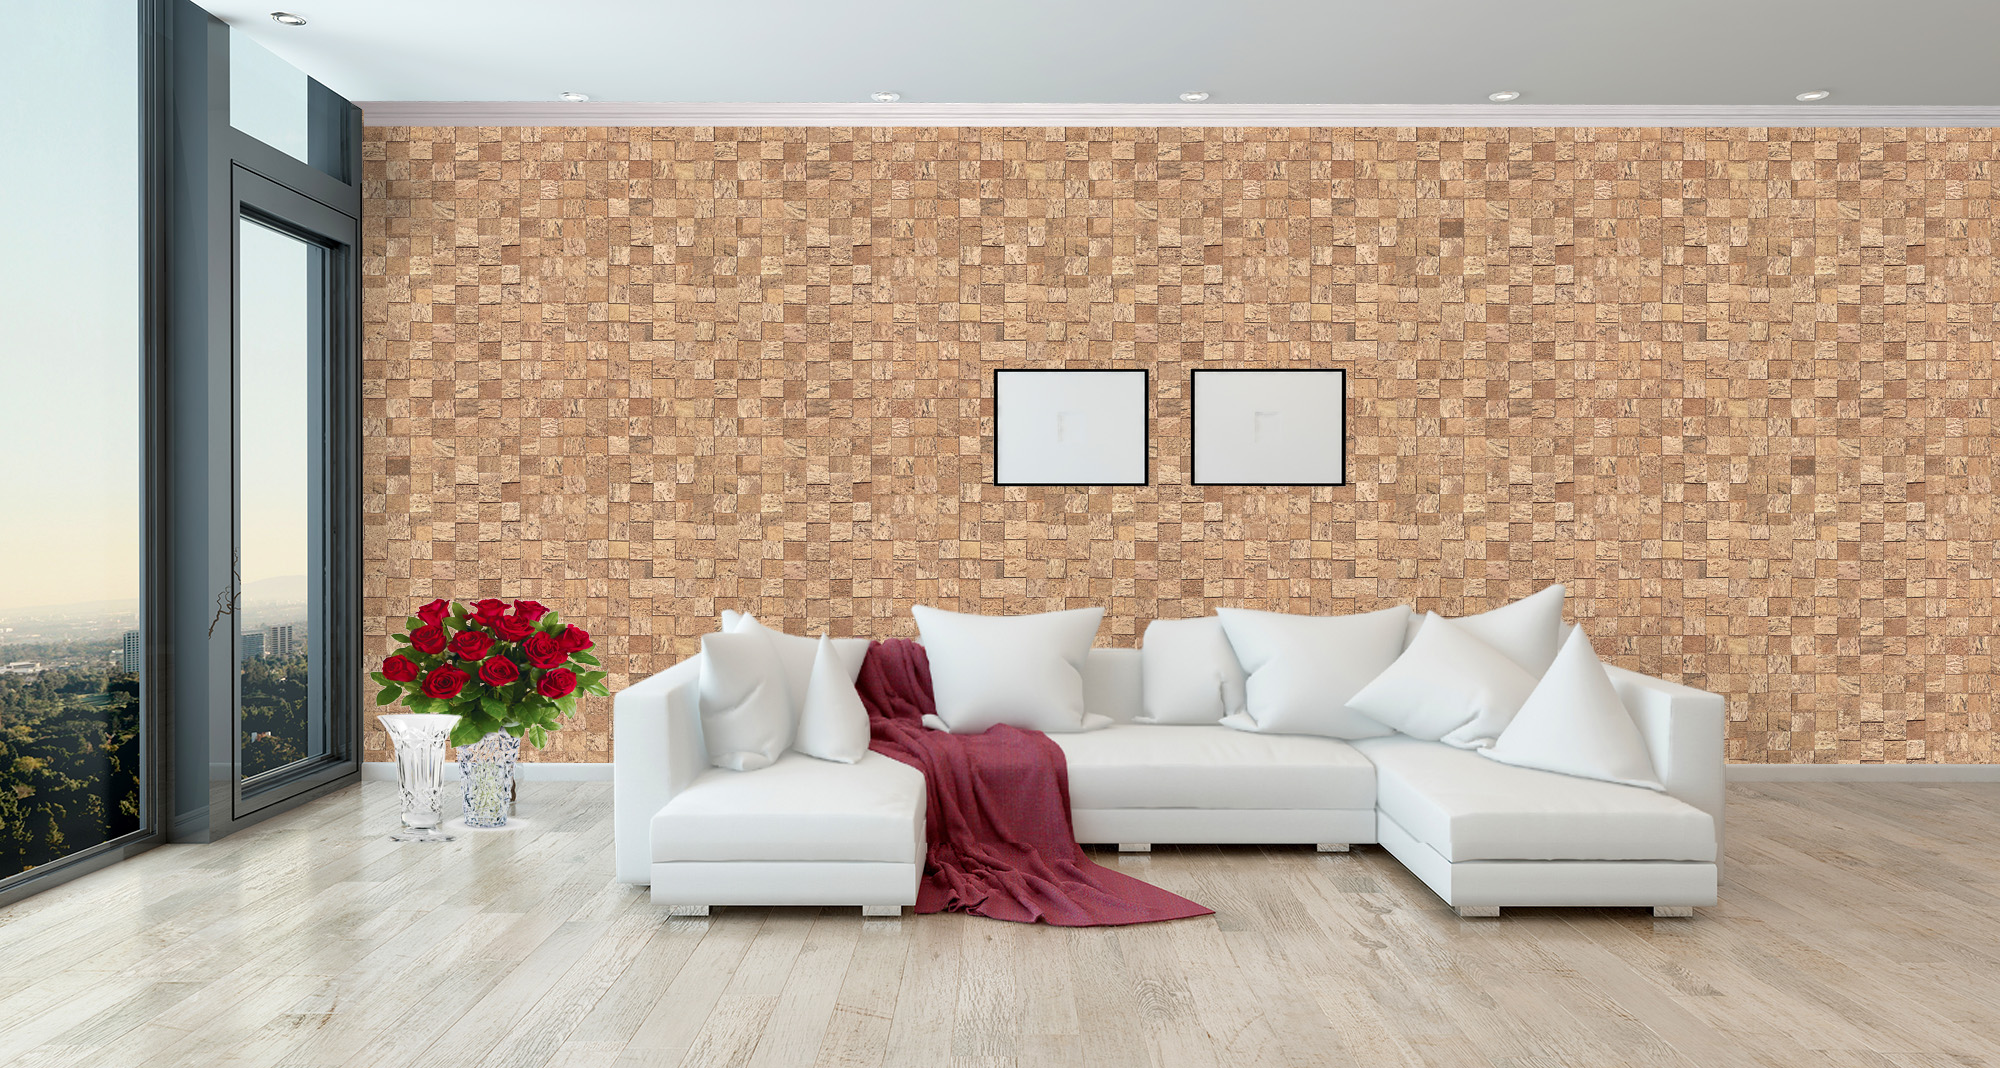 Self-Adhesive White Textured Cork Board Wall Tiles